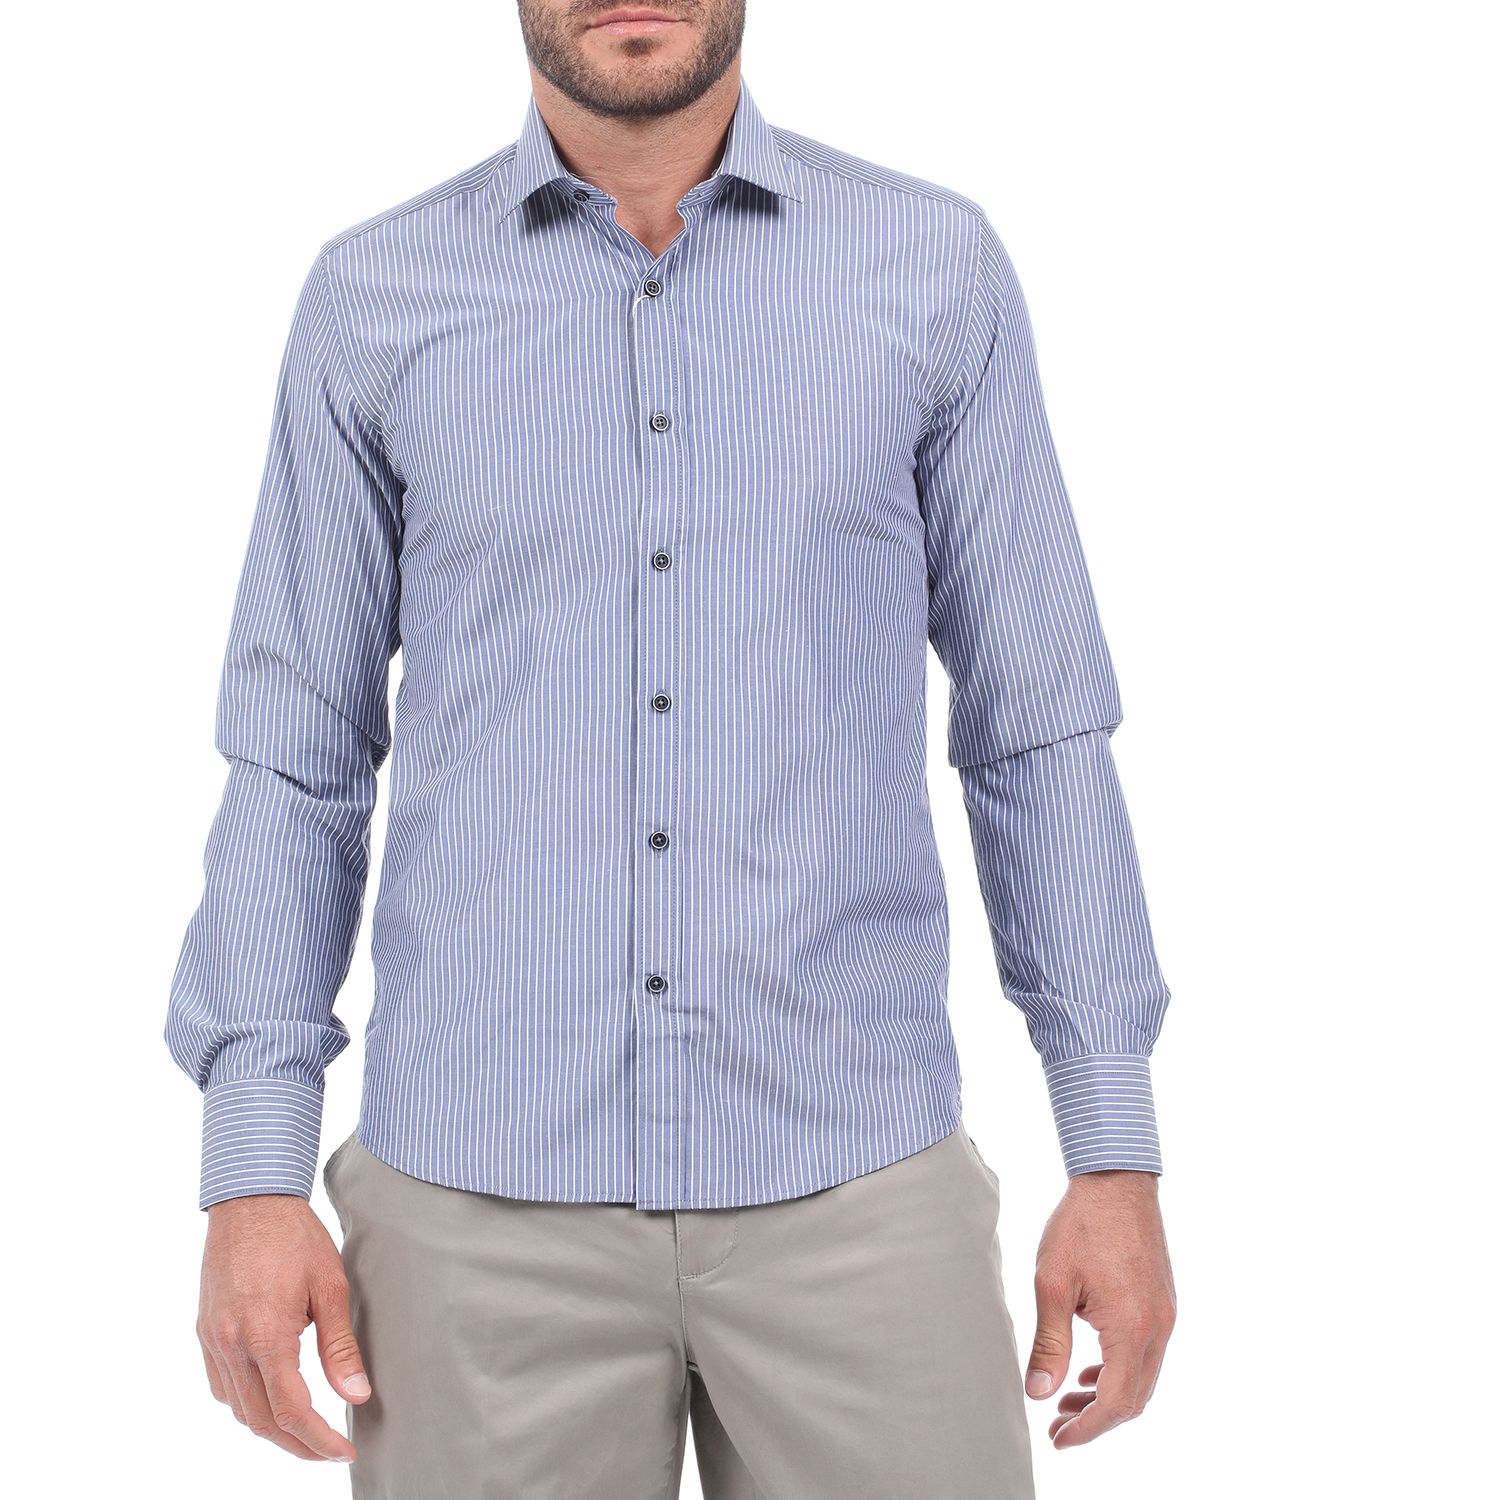 MARTIN & CO MARTIN & CO - Ανδρικό πουκάμισο MARTIN & CO SLIM FIT μπλε λευκό